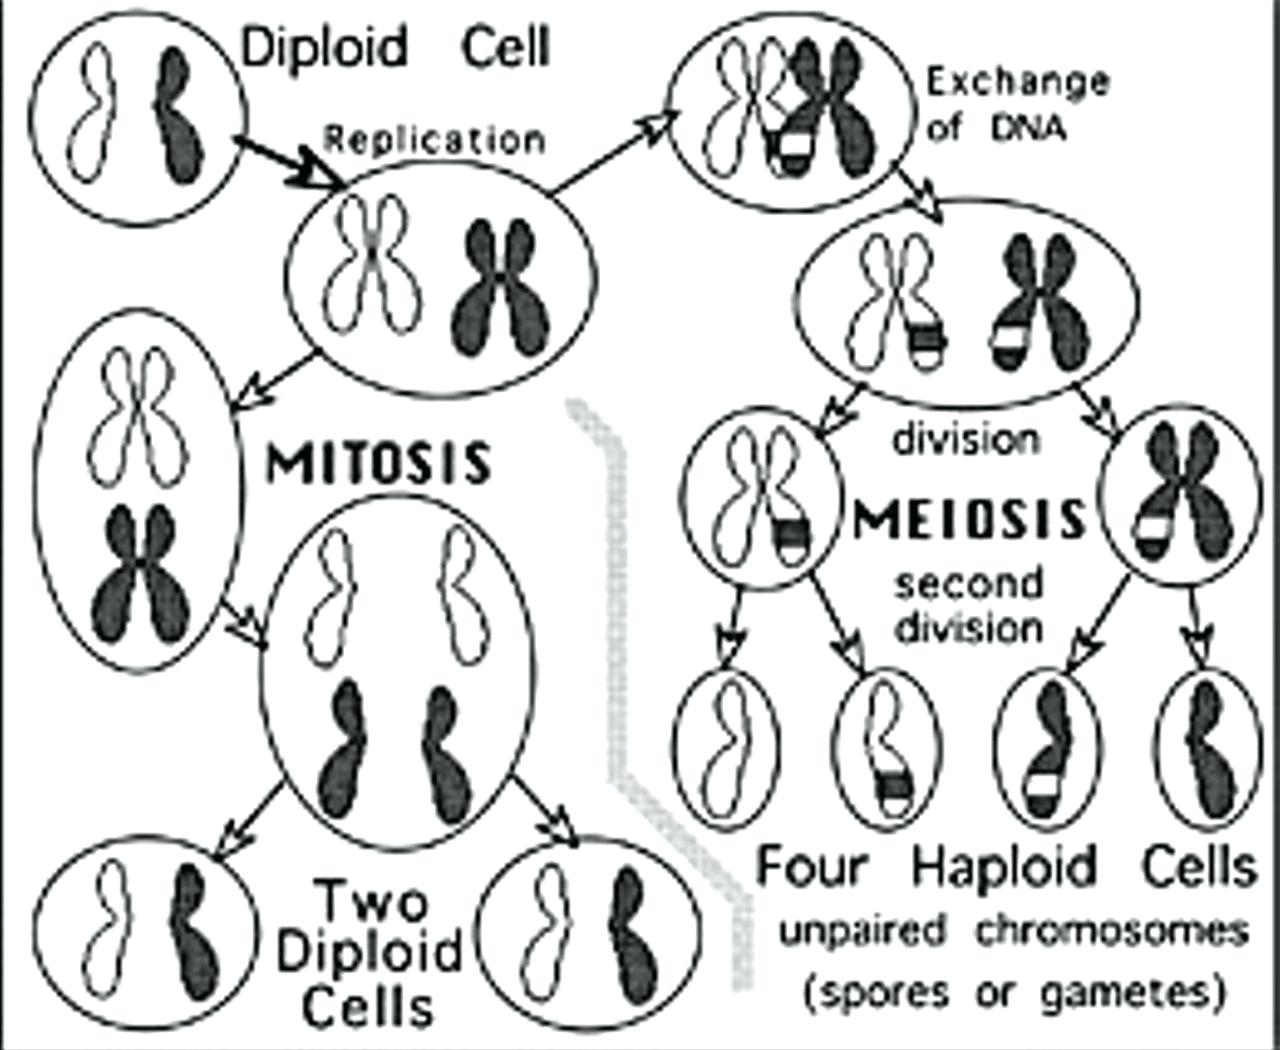 mitosis flip book diagram masters